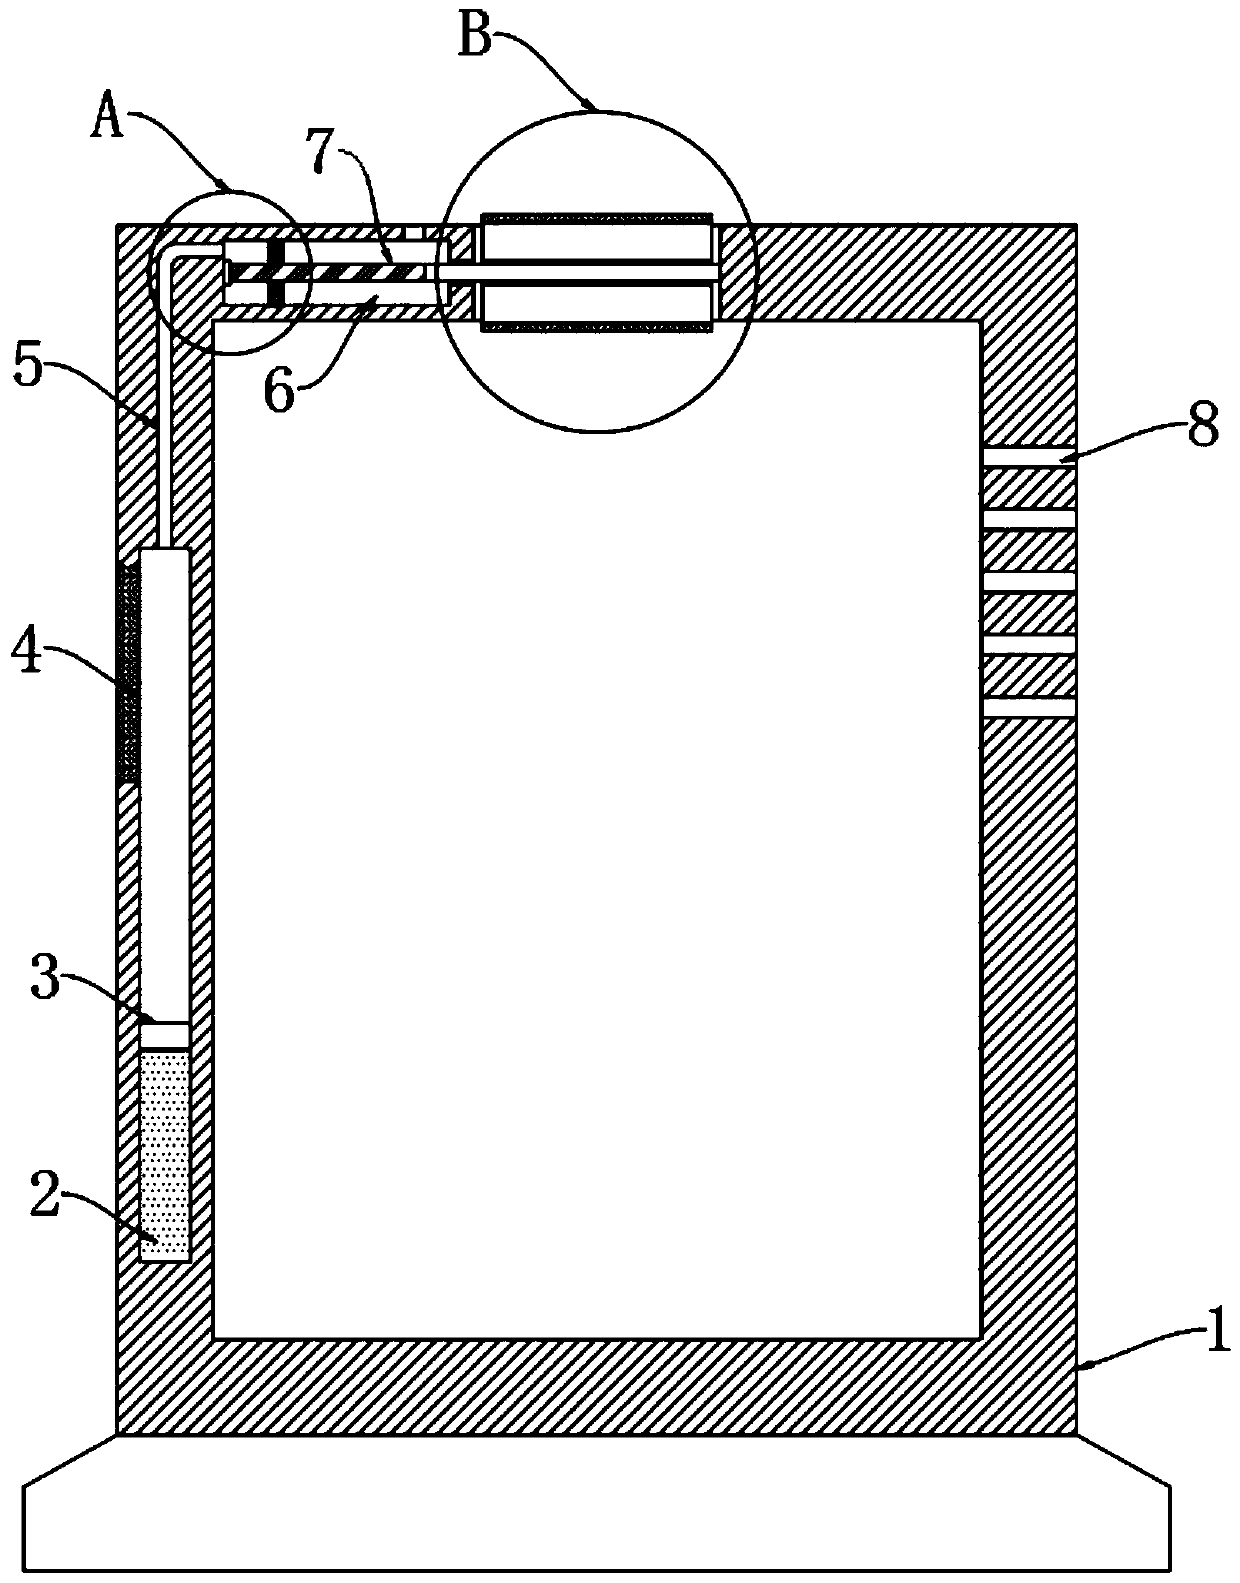 Self-heat-dissipation type power cabinet